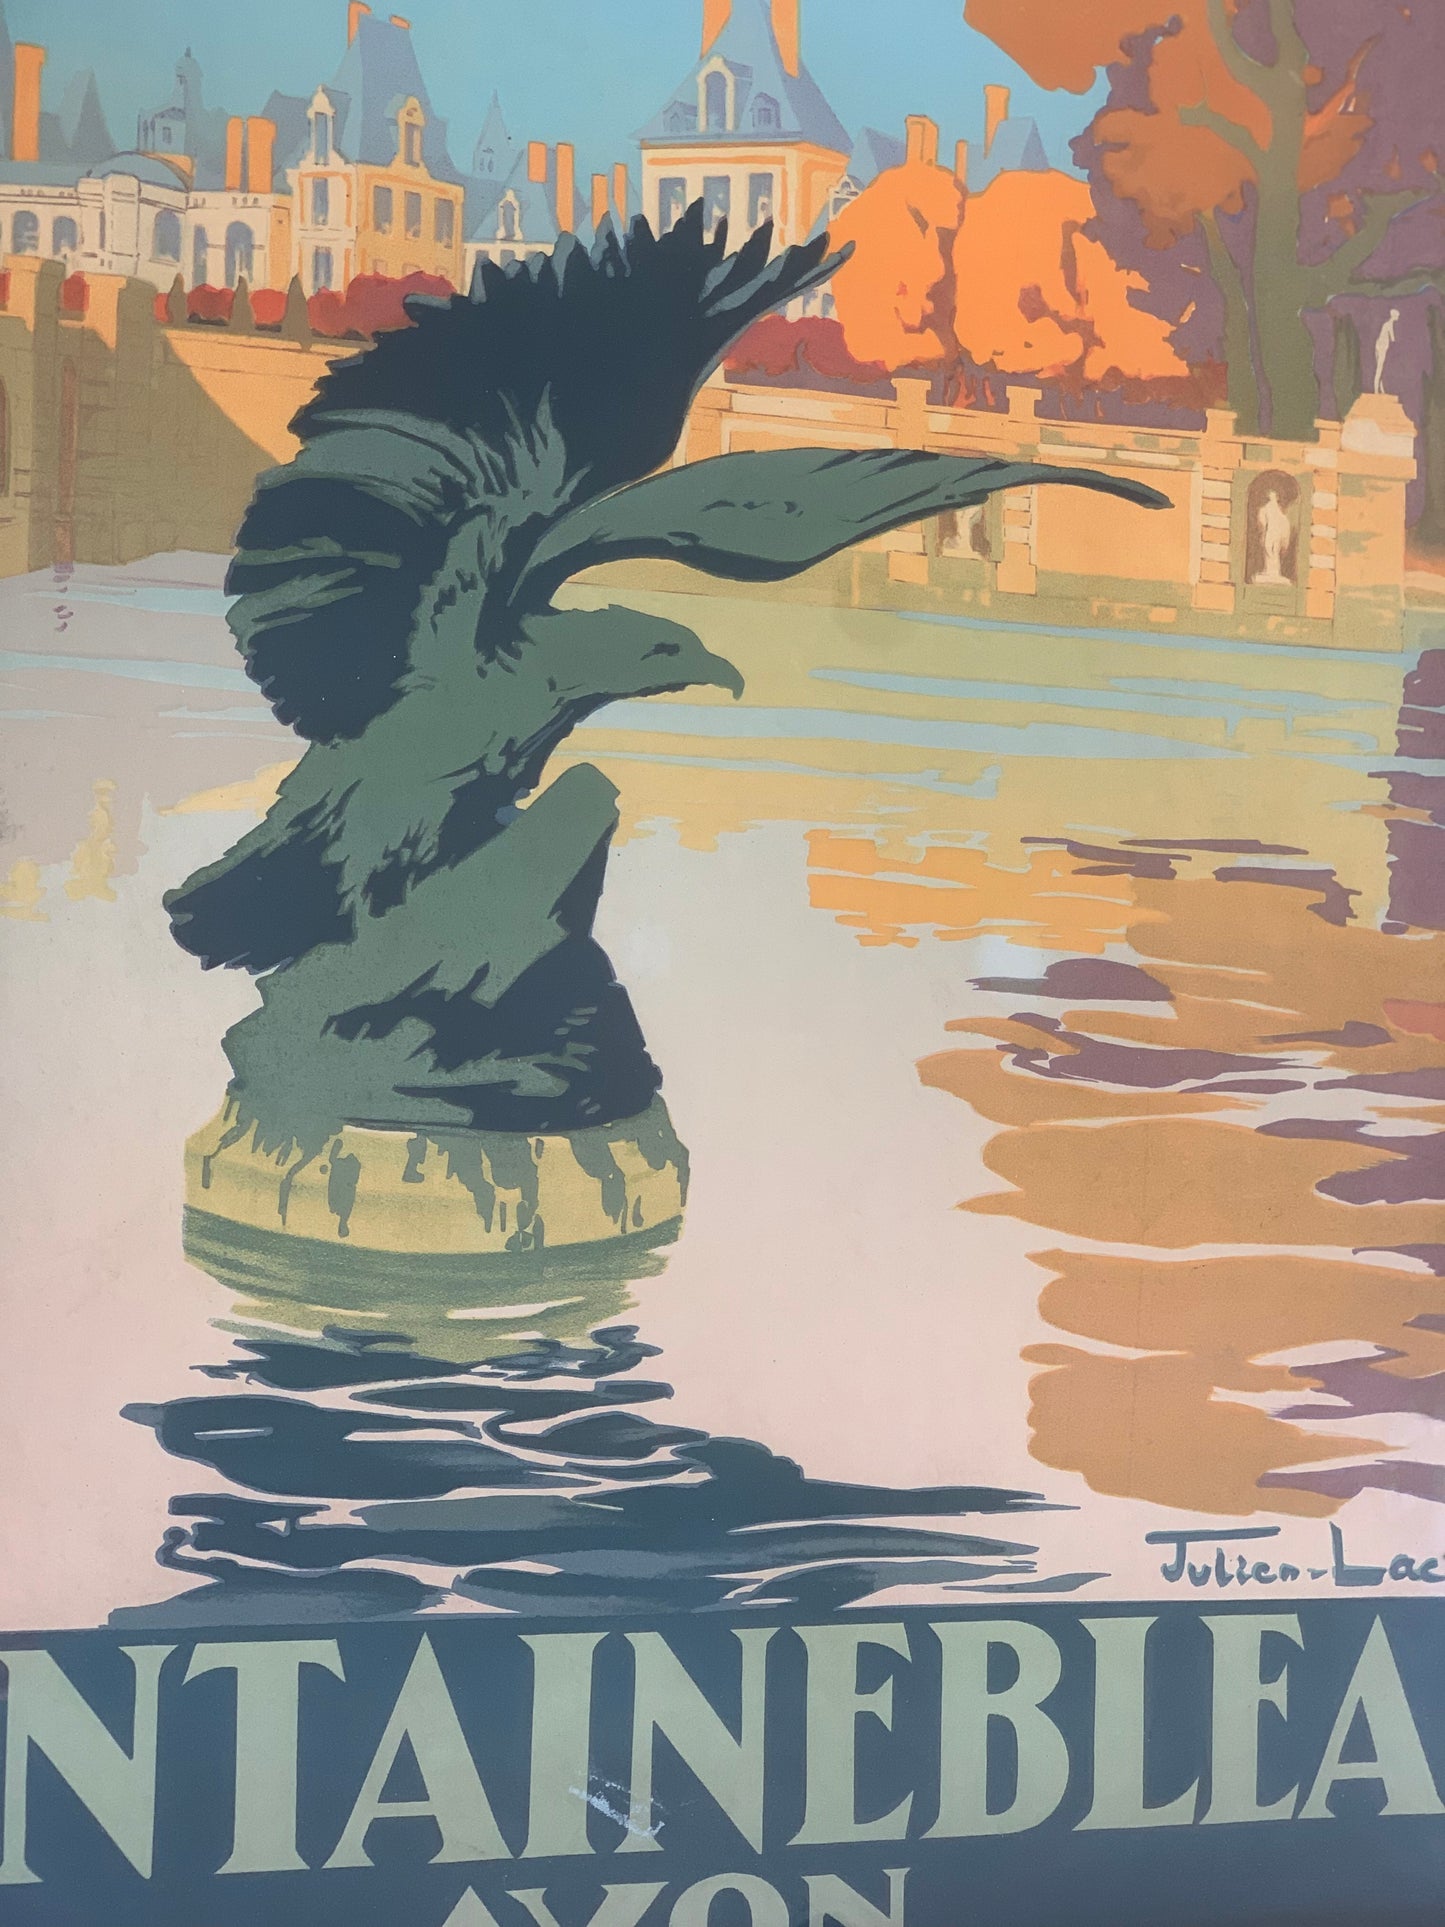 "Fontainebleau Avon" Framed Travel Poster/Art